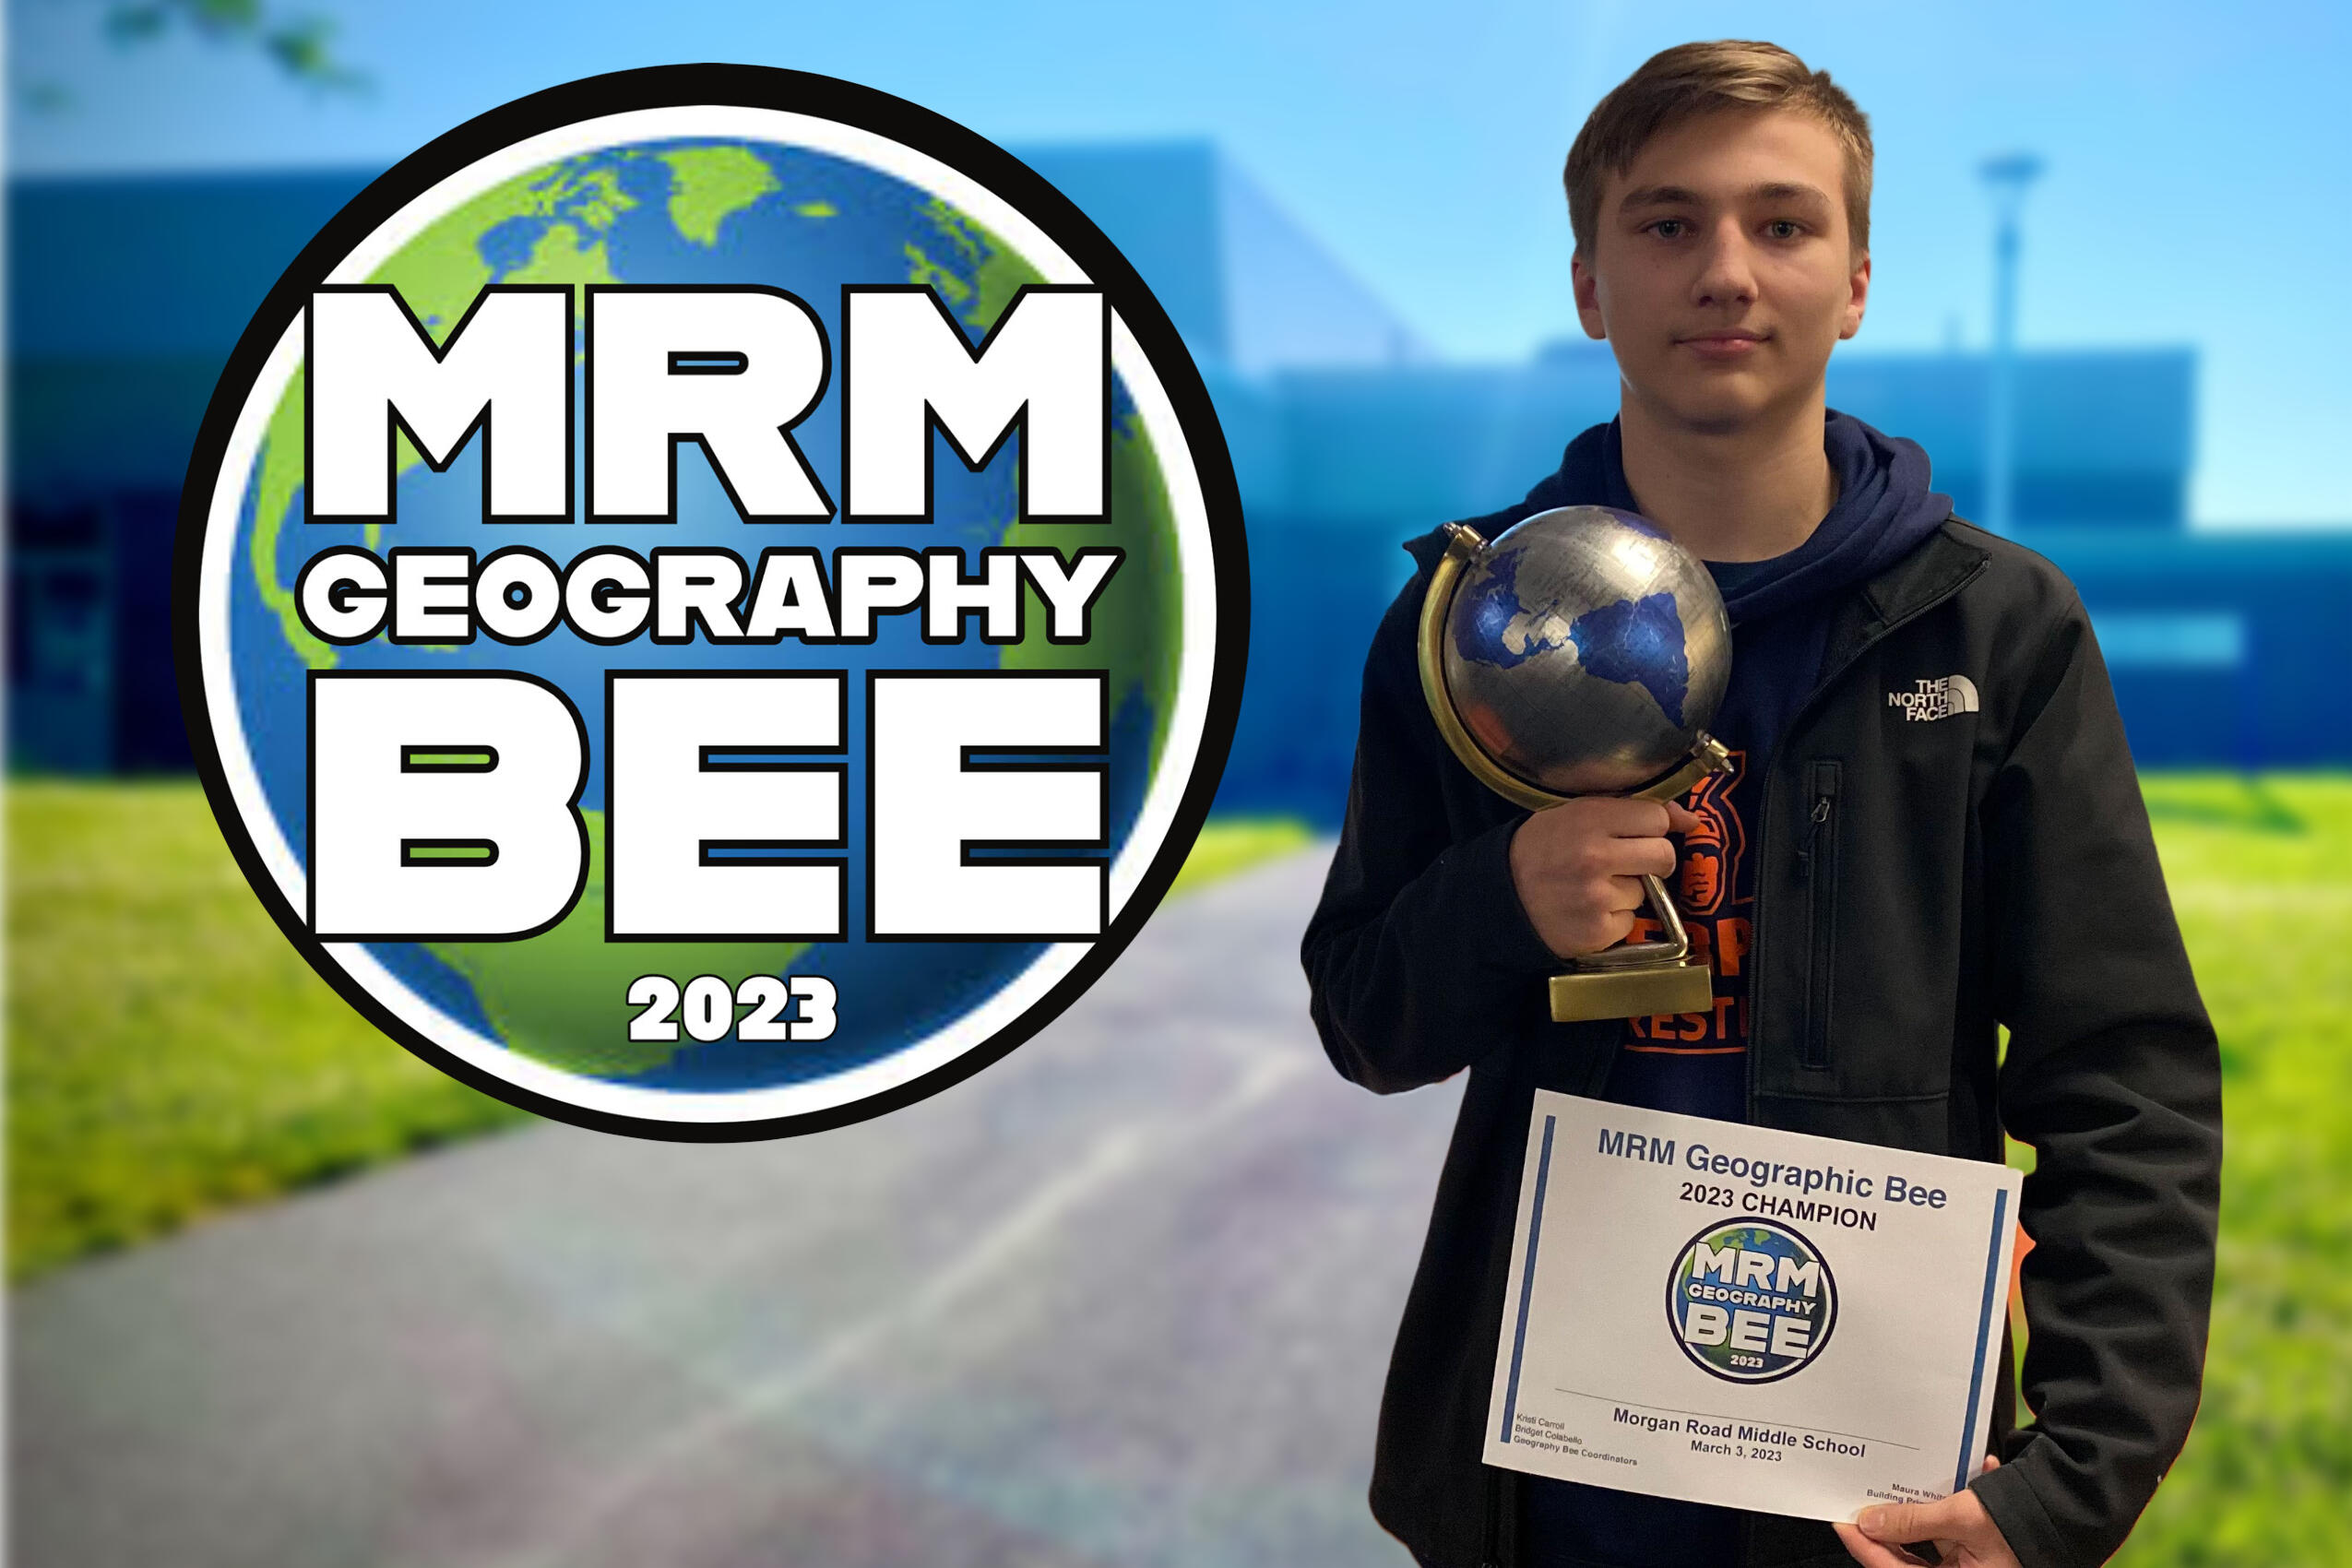 Congratulations MRM Geography Bee Champion Liam Cowan